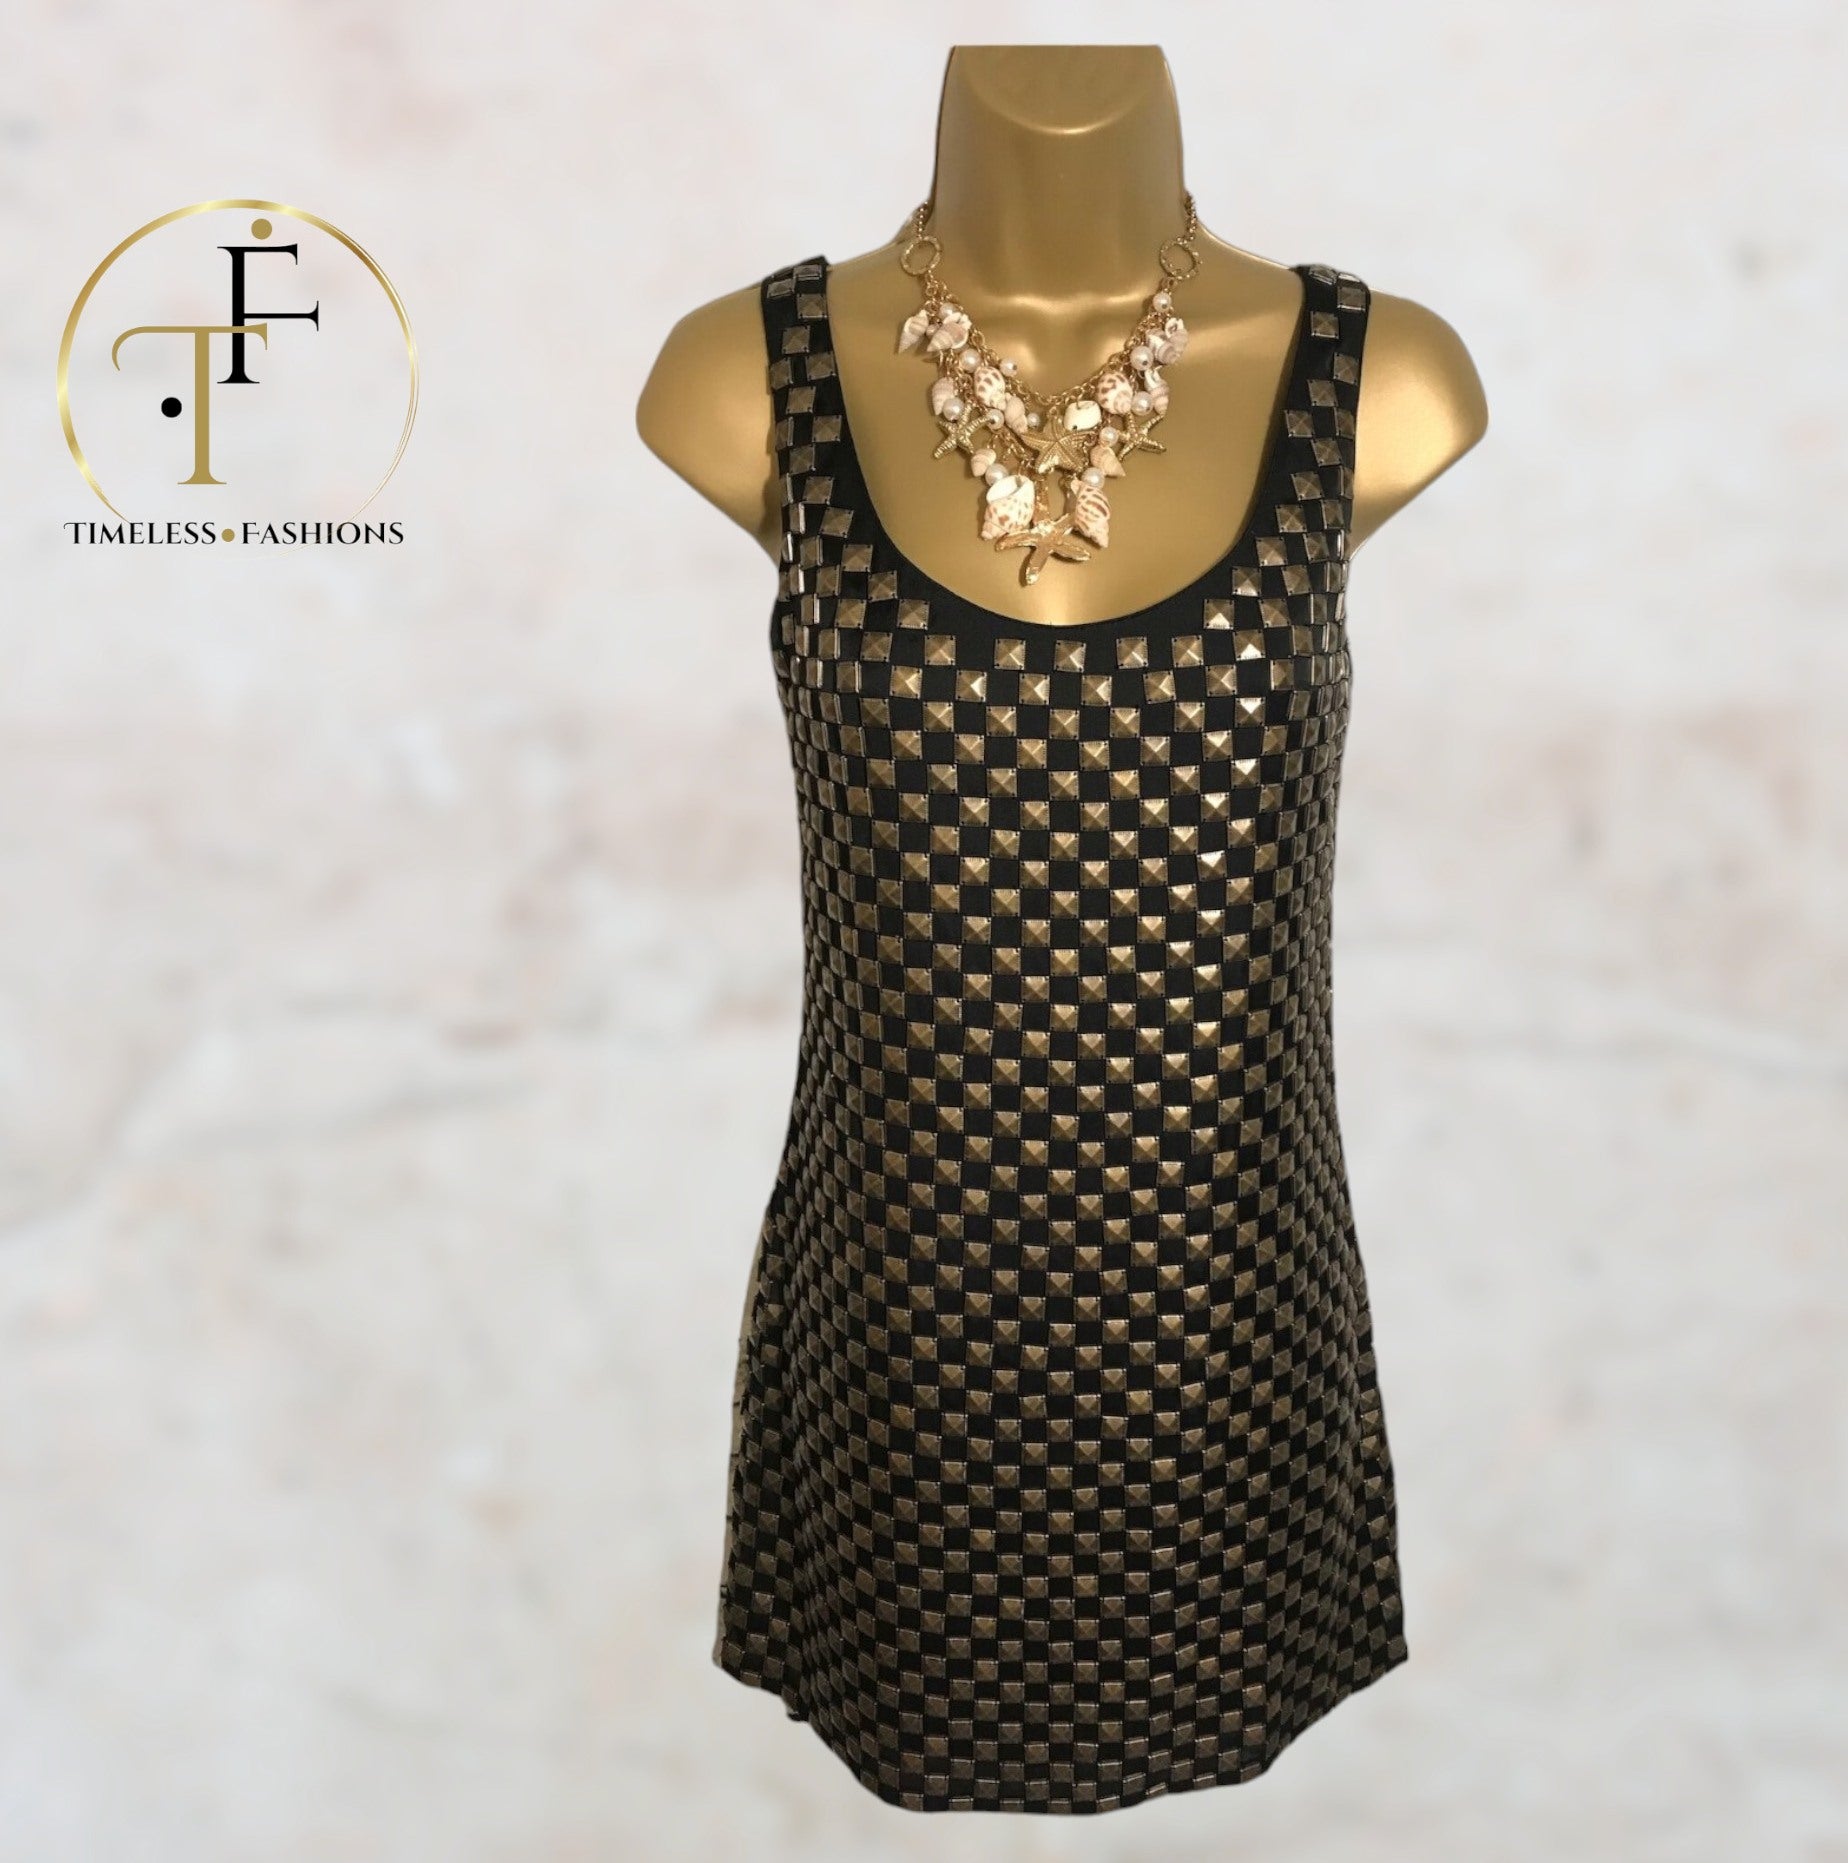 Boutique by Jaeger Women's Black Bronze Embellished Mini Dress UK 10 US 6 EU 38 Timeless Fashions